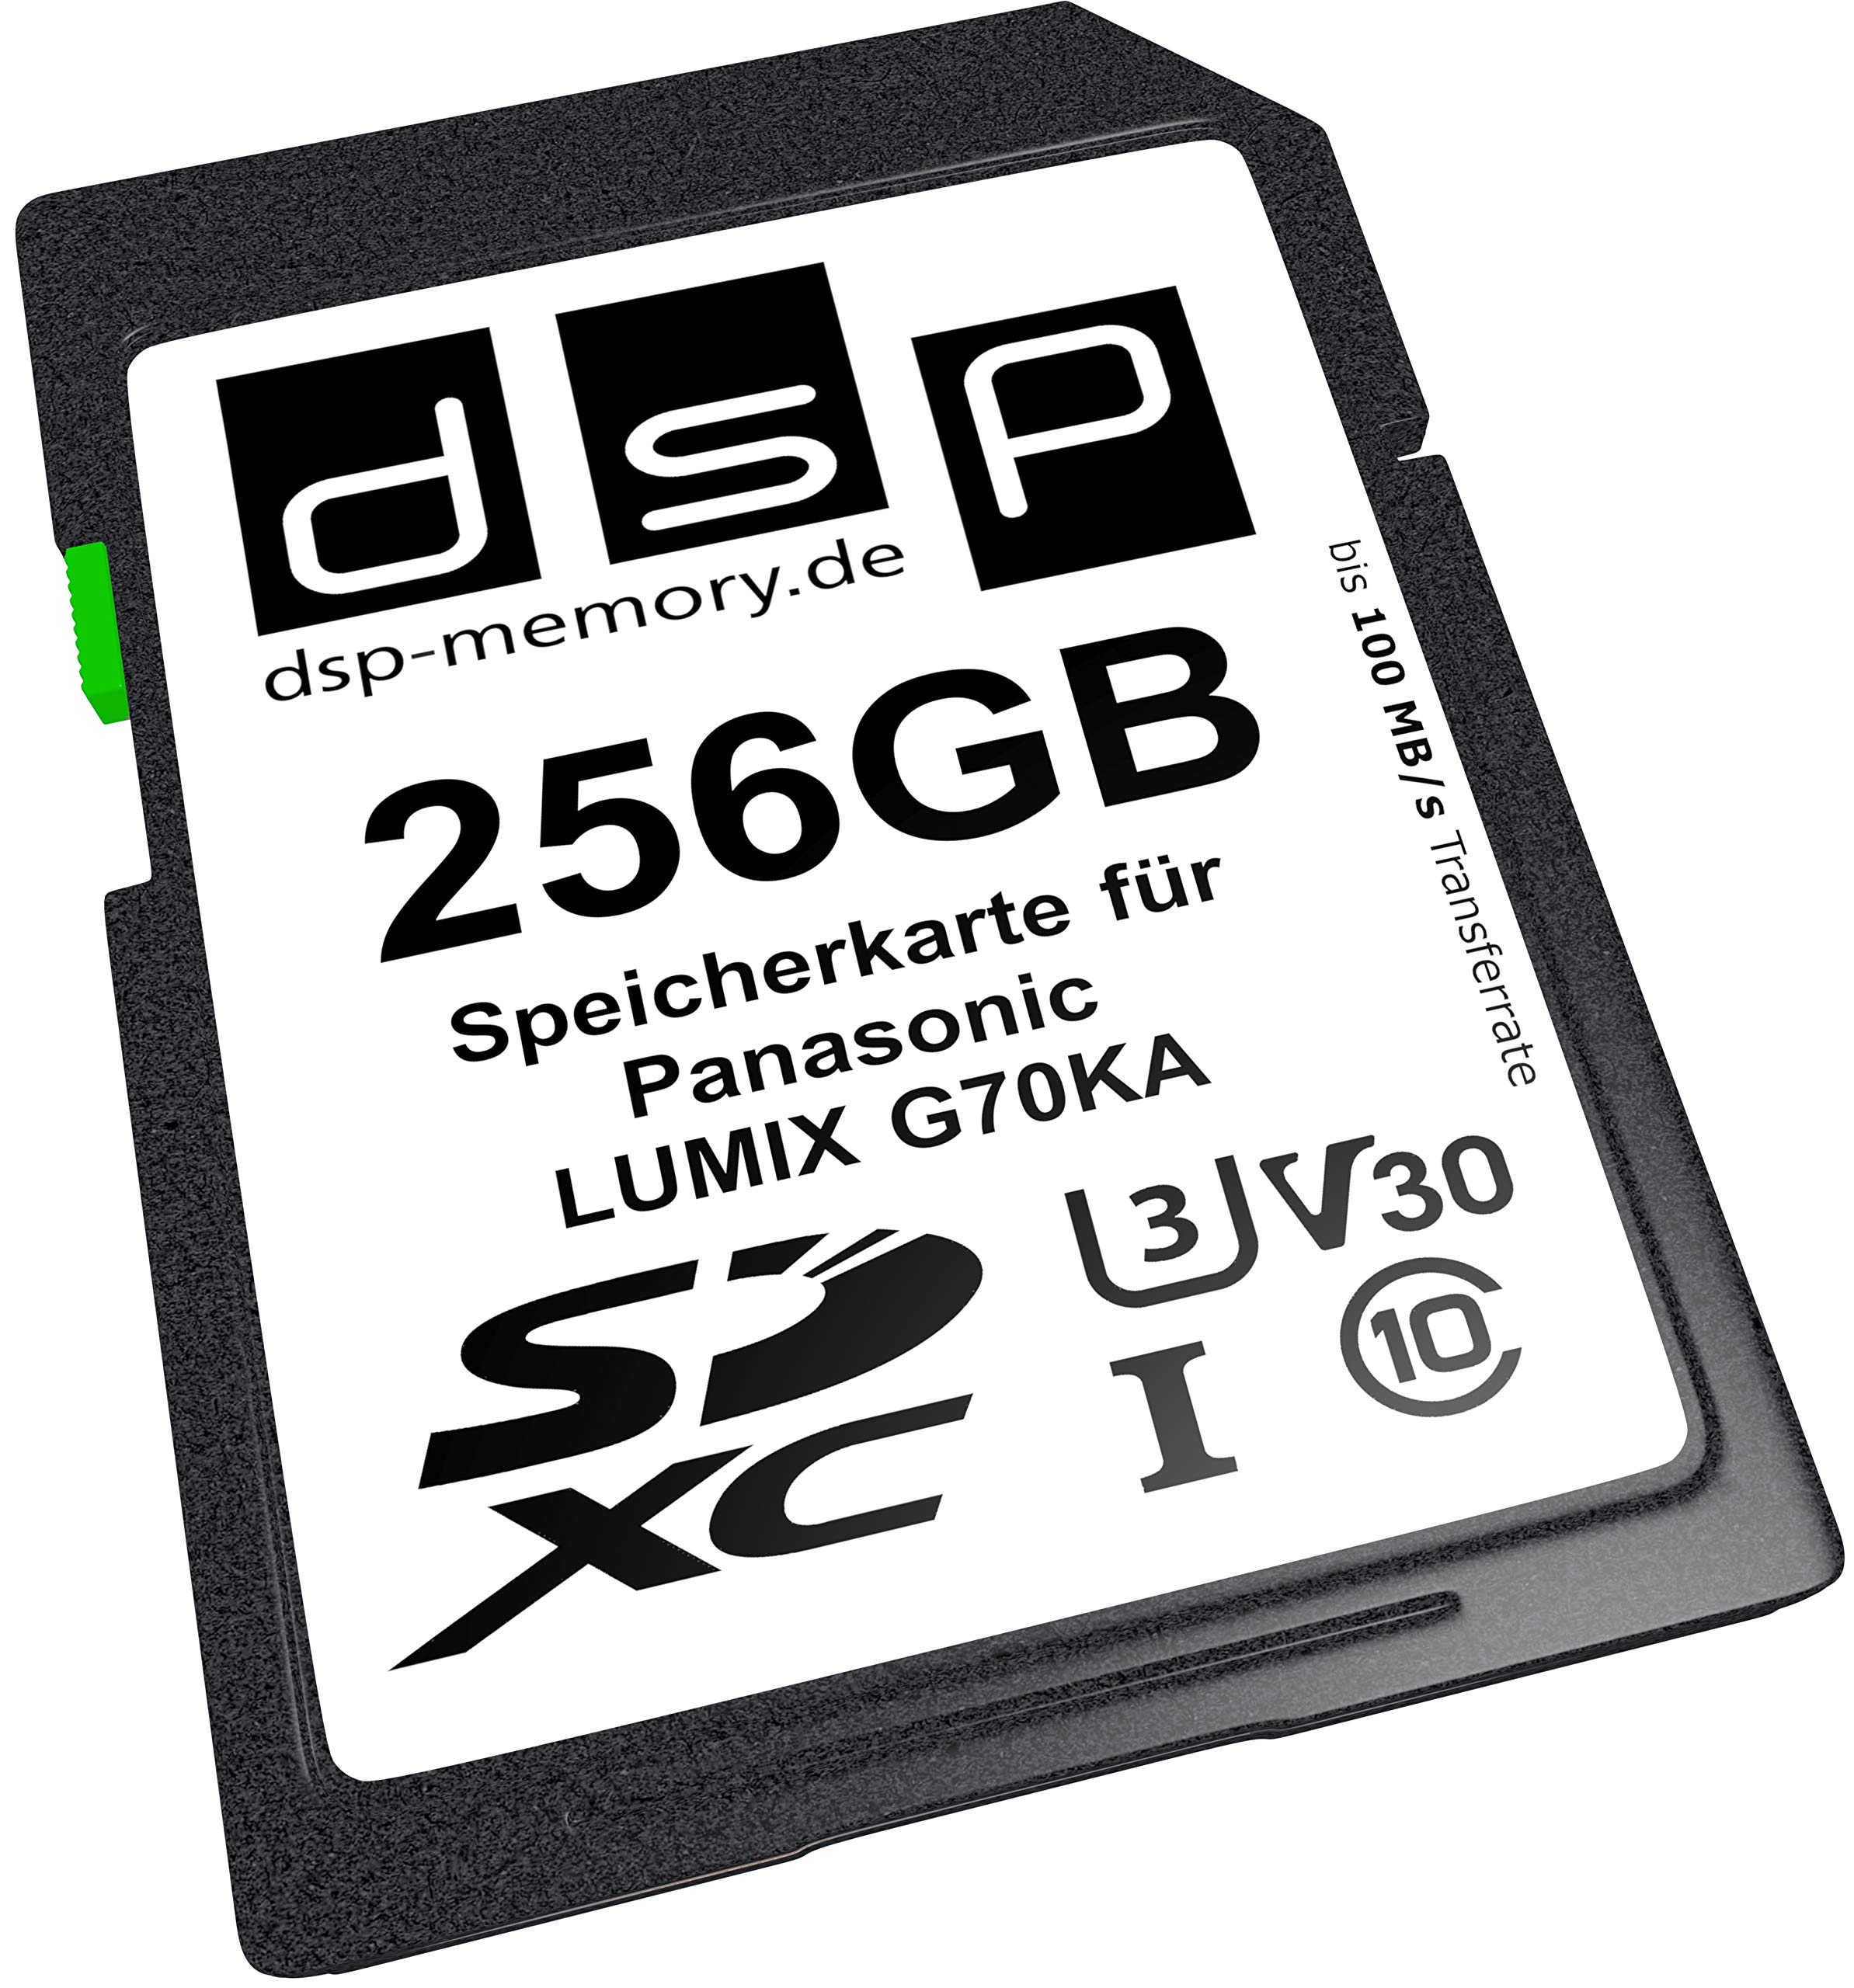 DSP Memory 256GB Professional V30 Speicherkarte für Panasonic LUMIX G70KA Digitalkamera